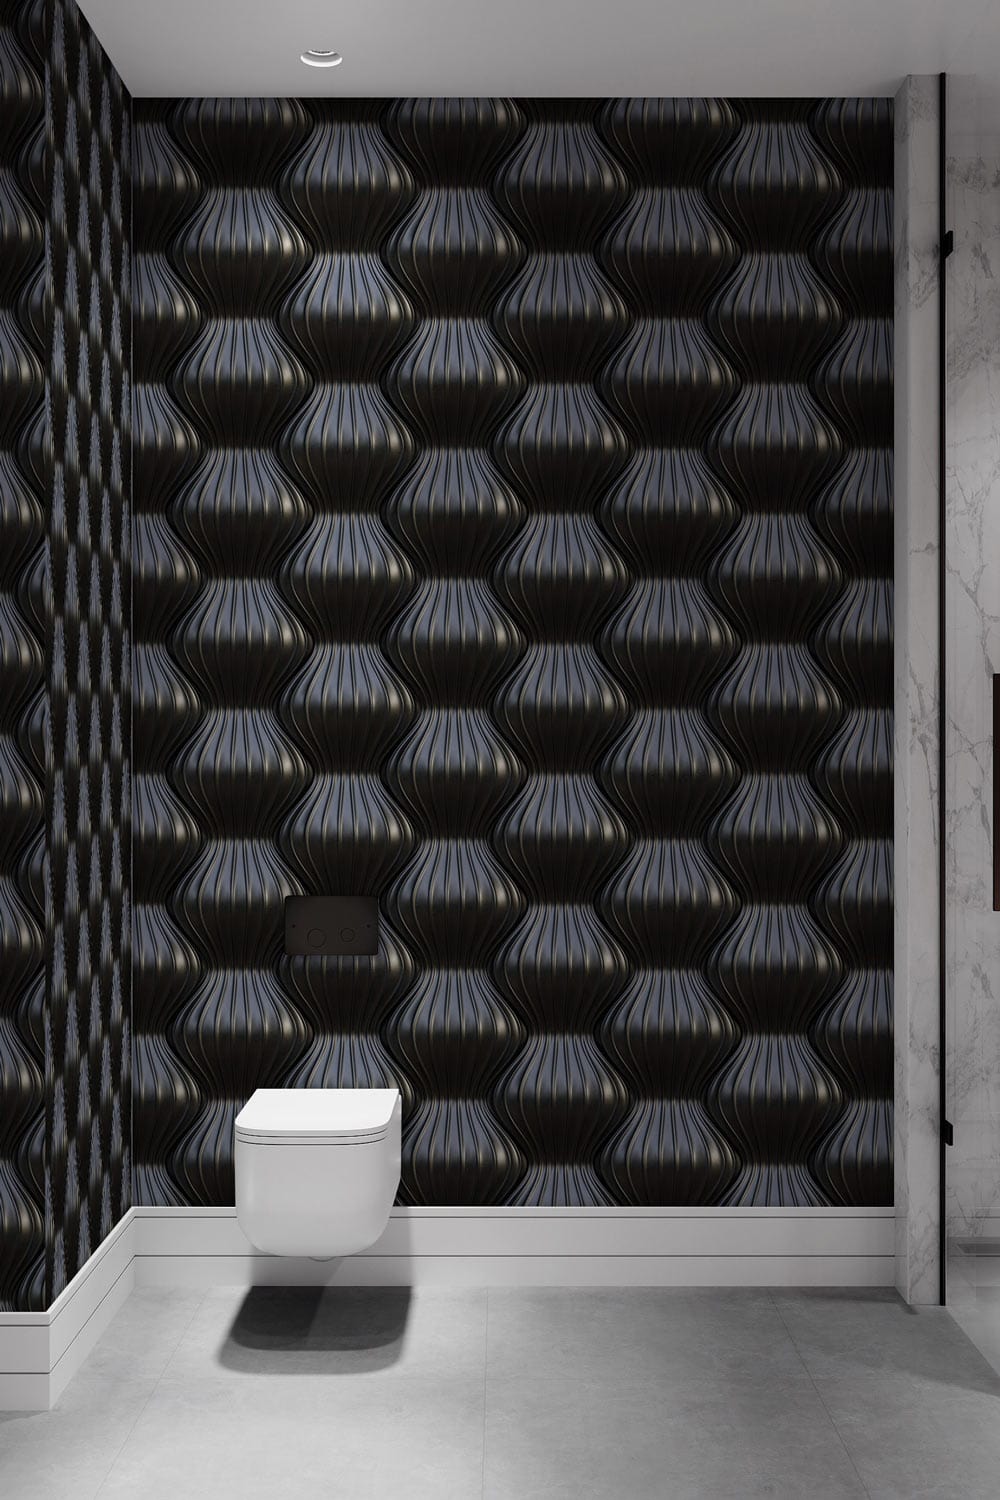 Toilet wallpaper with dark metal components